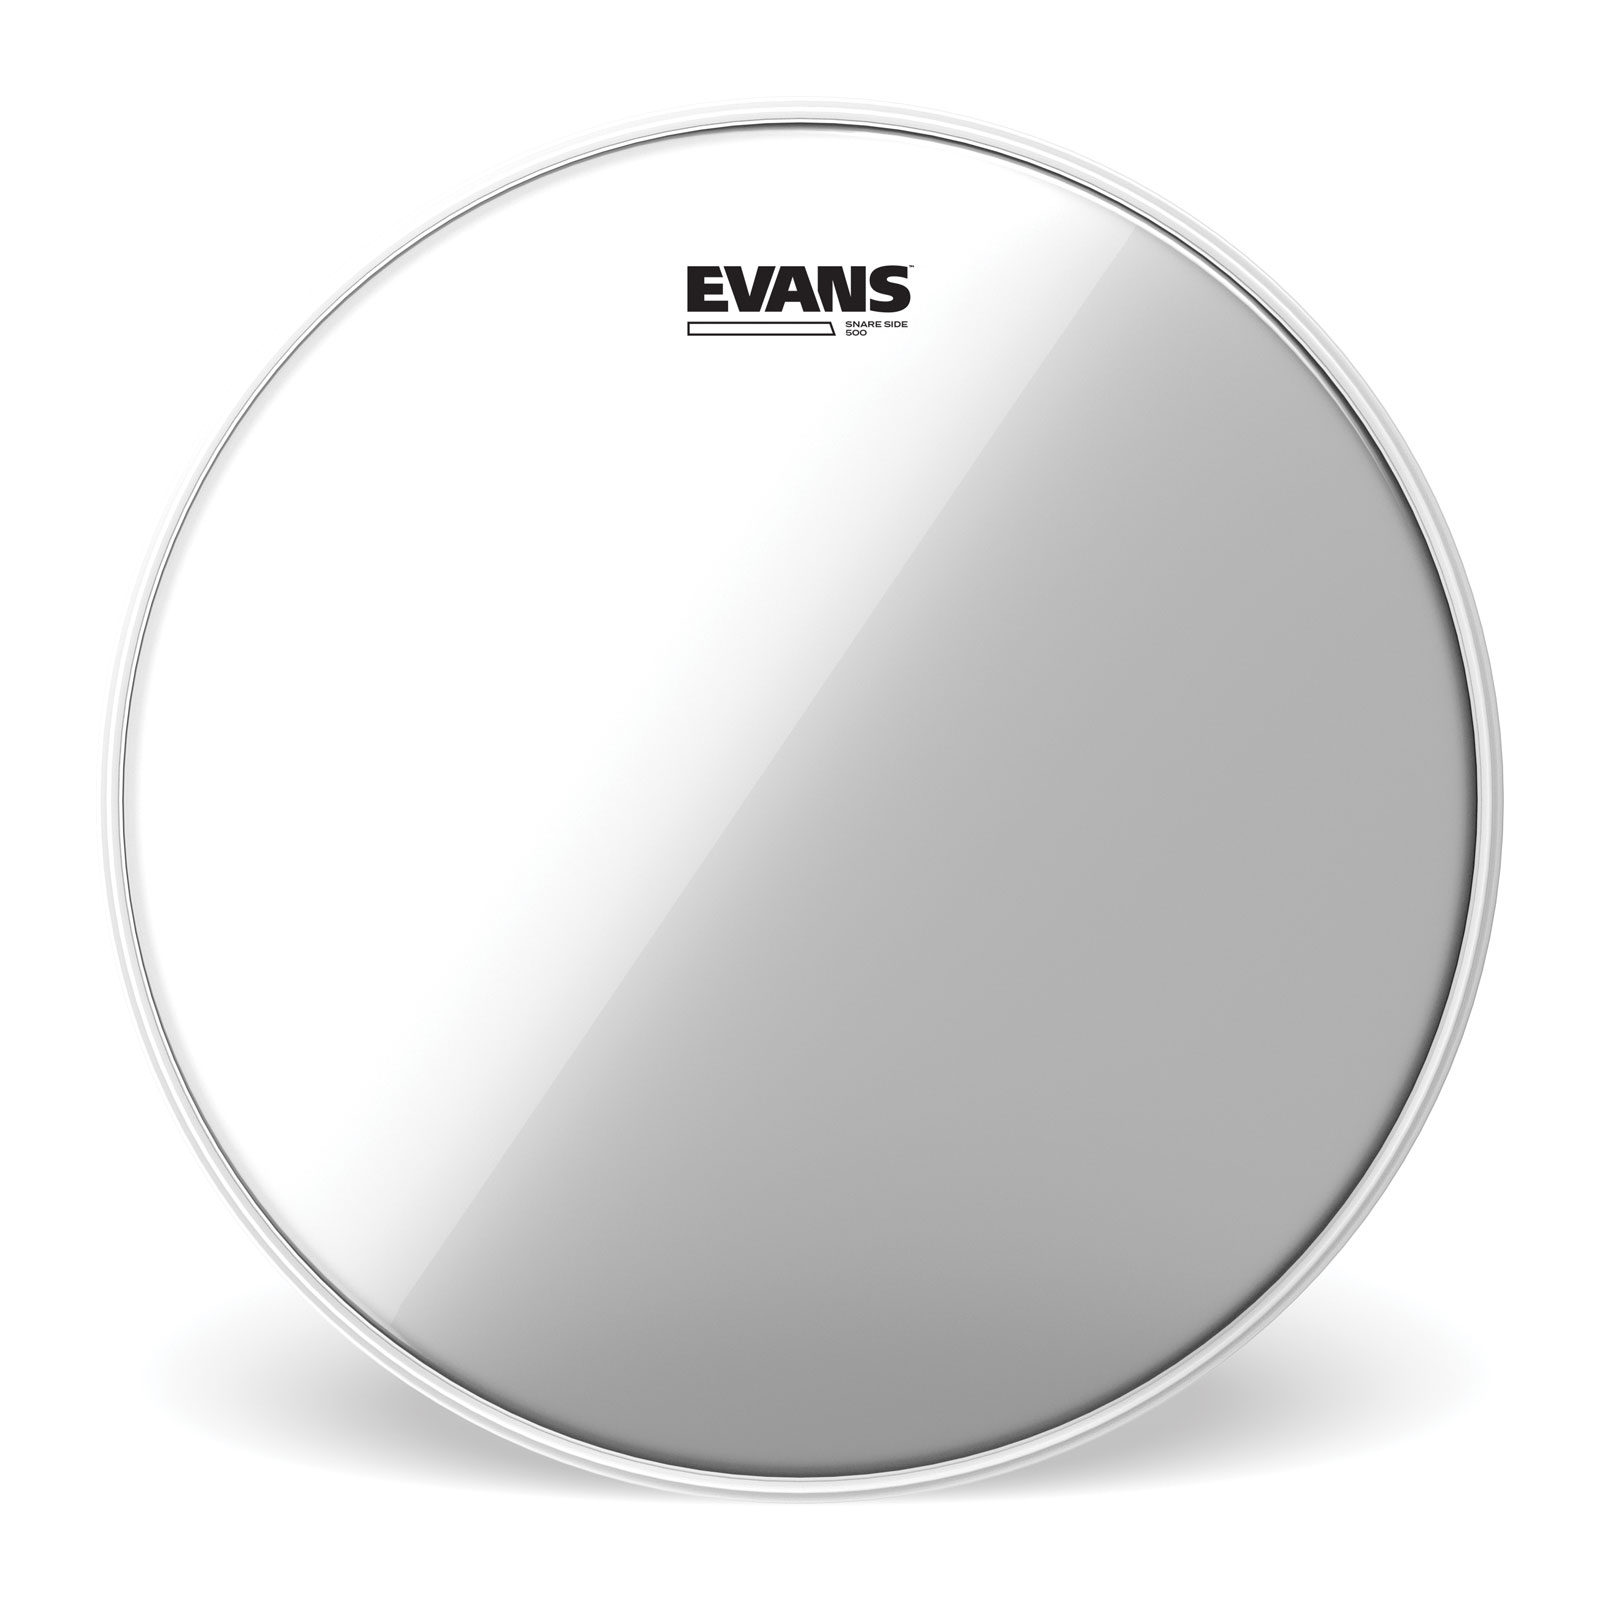 EVANS S14R50 - PEAU 500 CLEAR 14